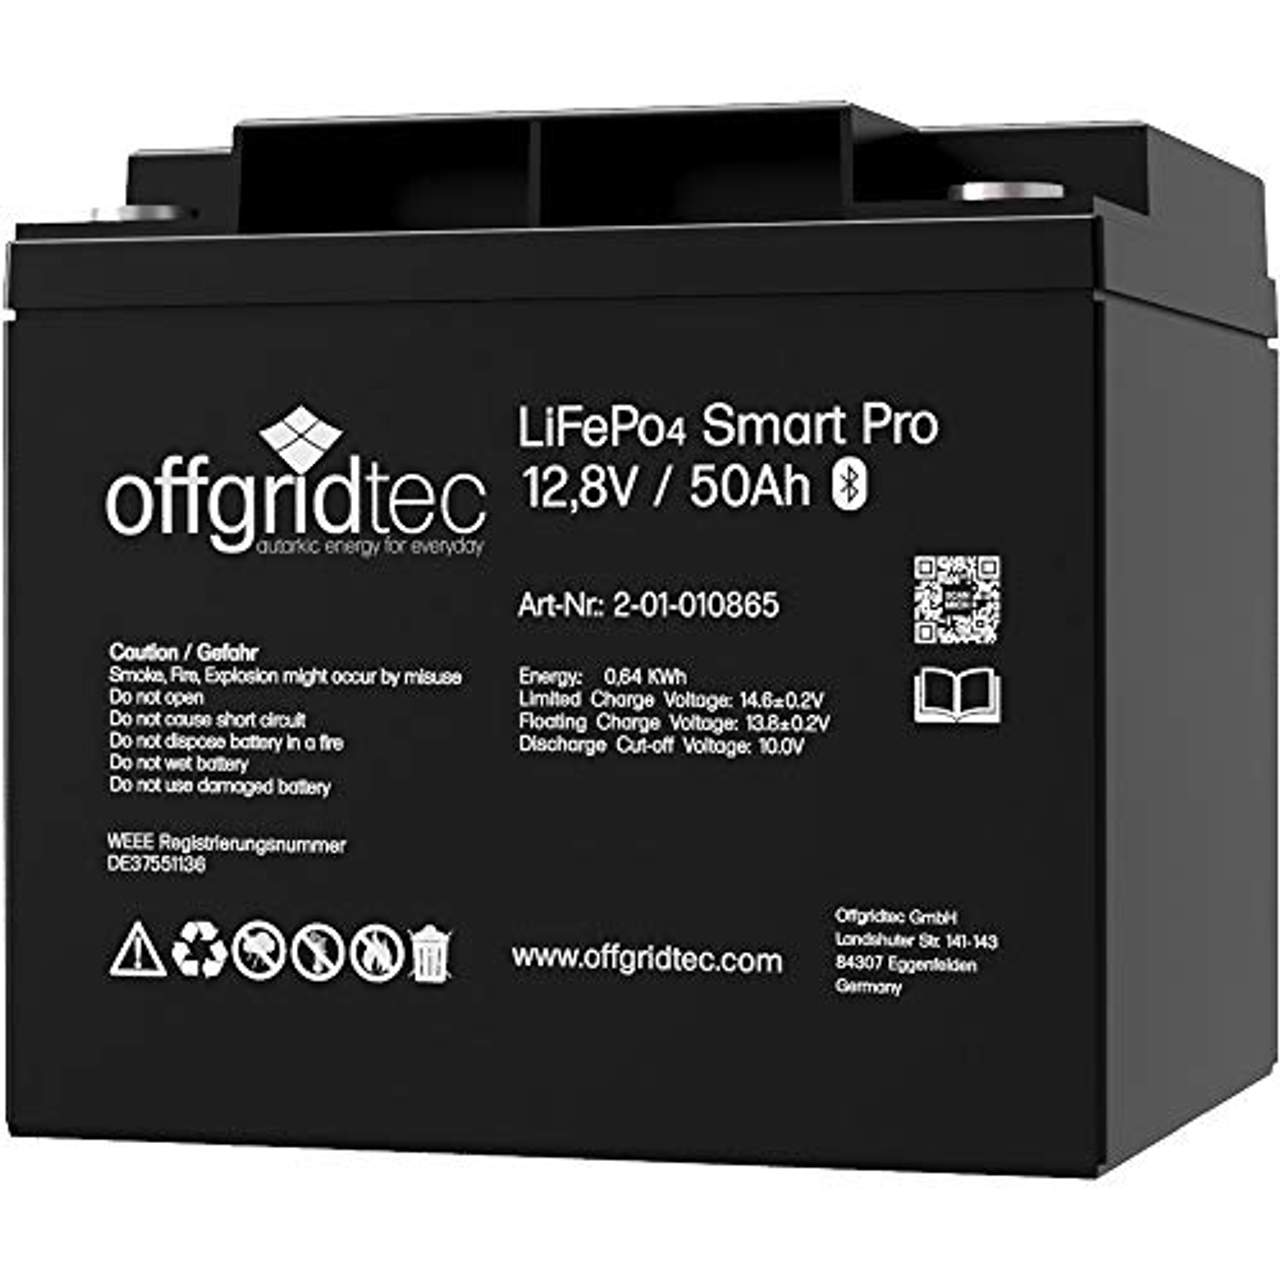 Offgridtec LiFePo4 Batterie 12/50 12,8V 50Ah 640Wh BMS integriert